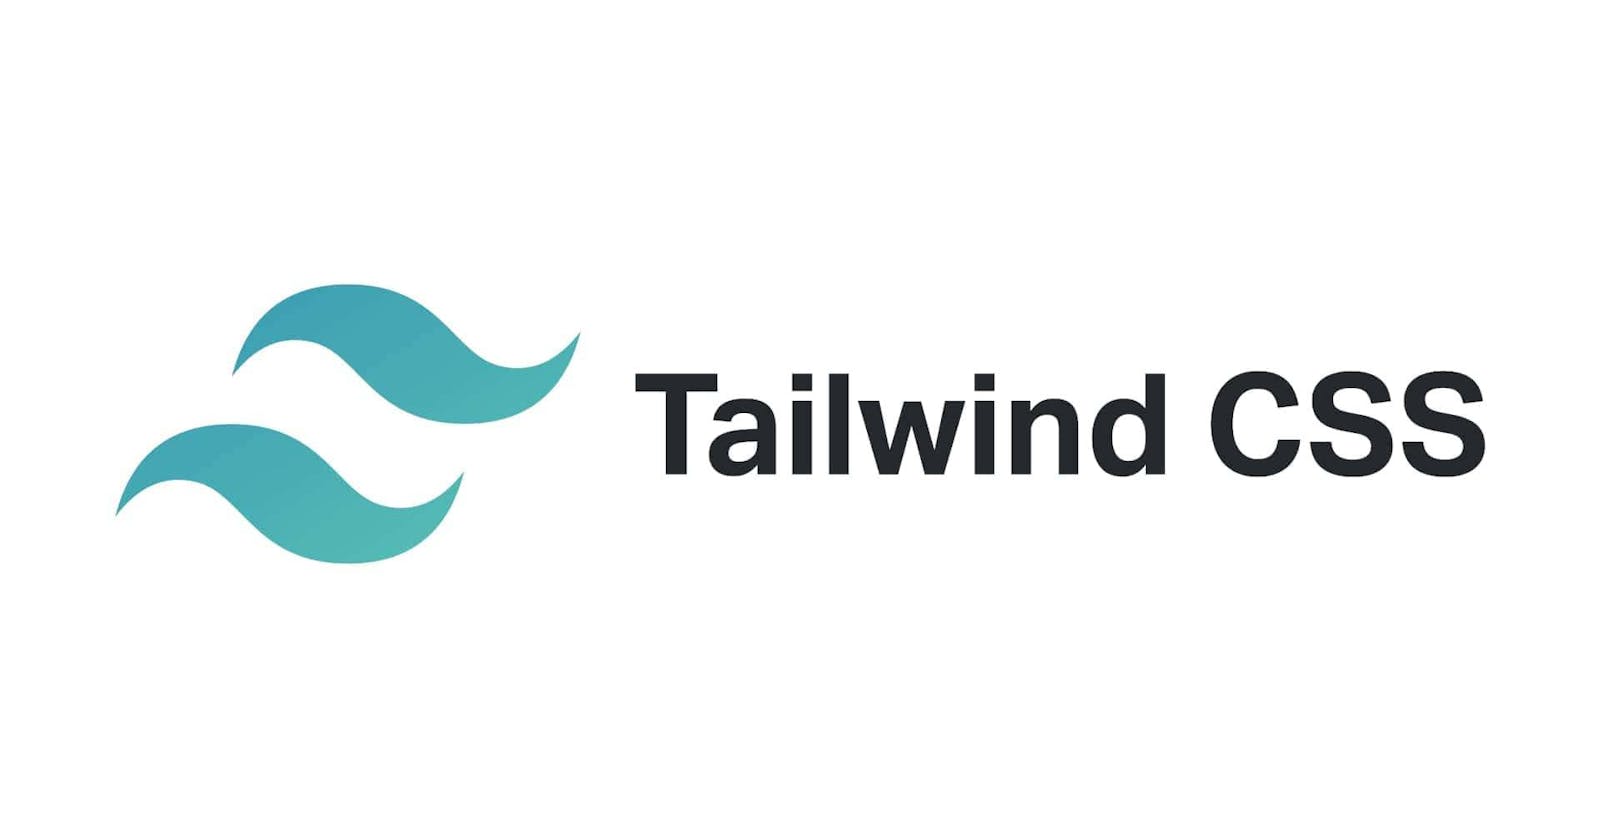 I love TailwindCSS 💙